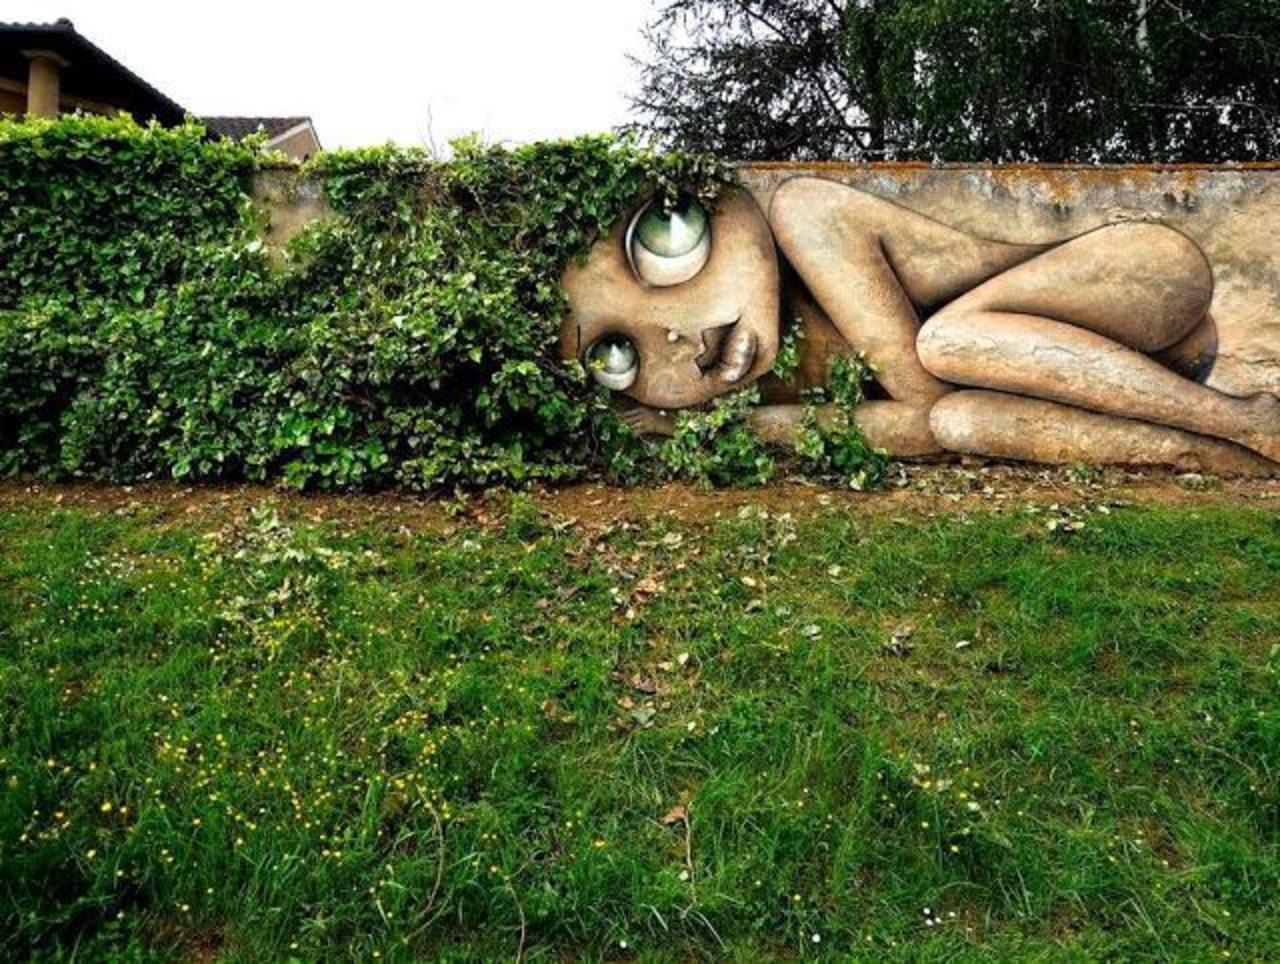 New street art piece from Vinnie in Eauze, France. #StreetArt #Graffiti #Mural http://t.co/AkMwxDlw43